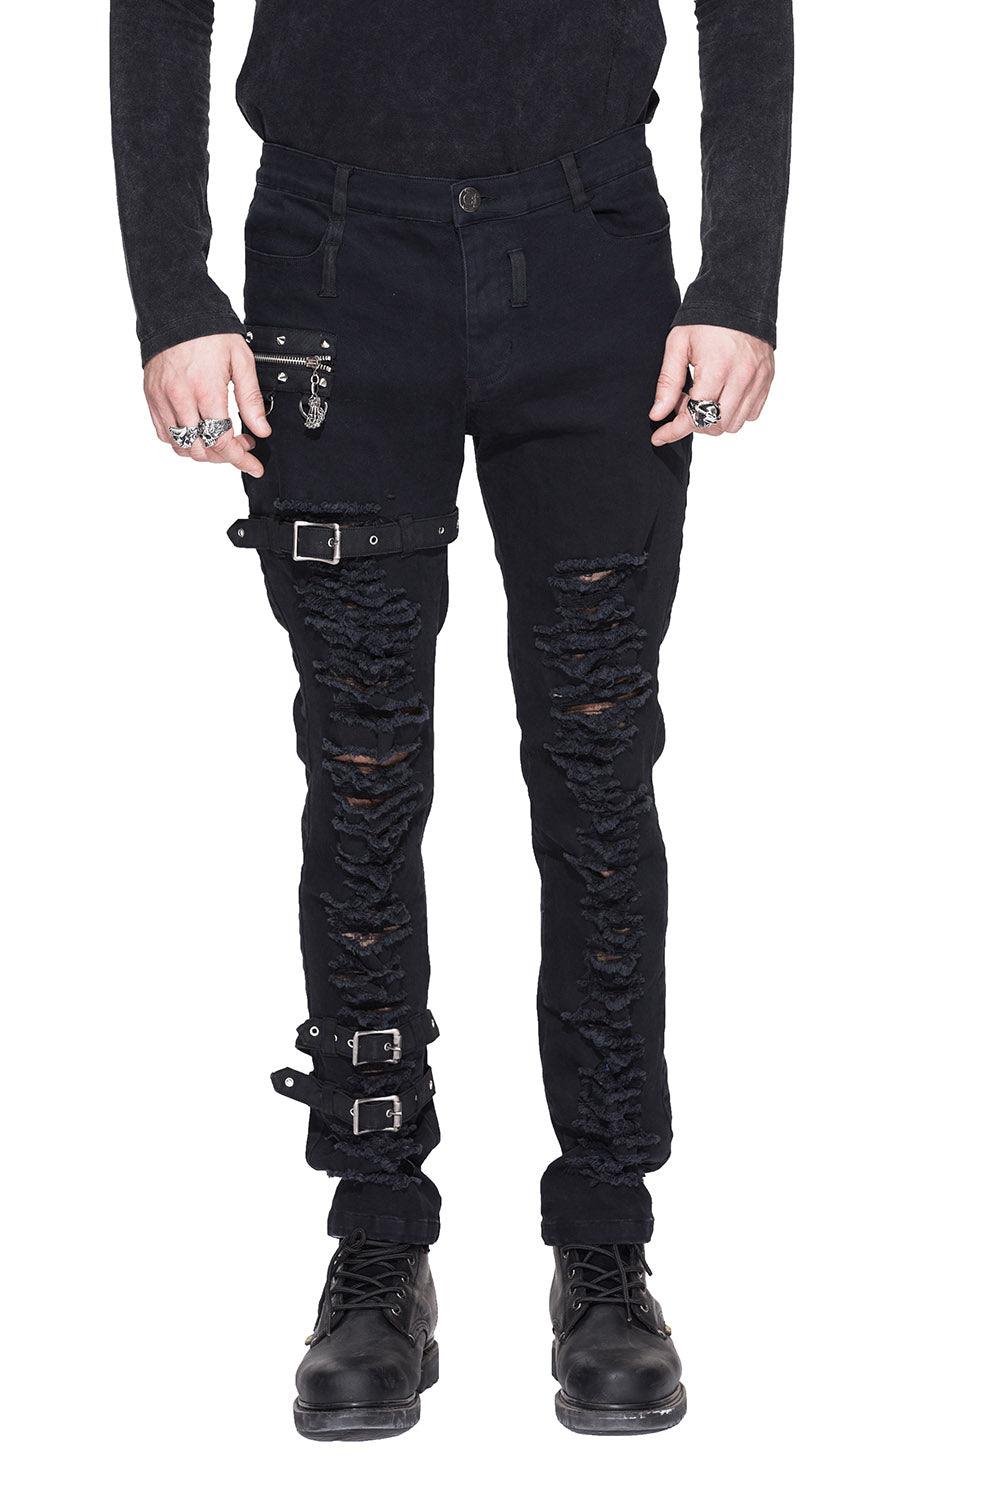 Black Fishnet Destructed Chain Jeans